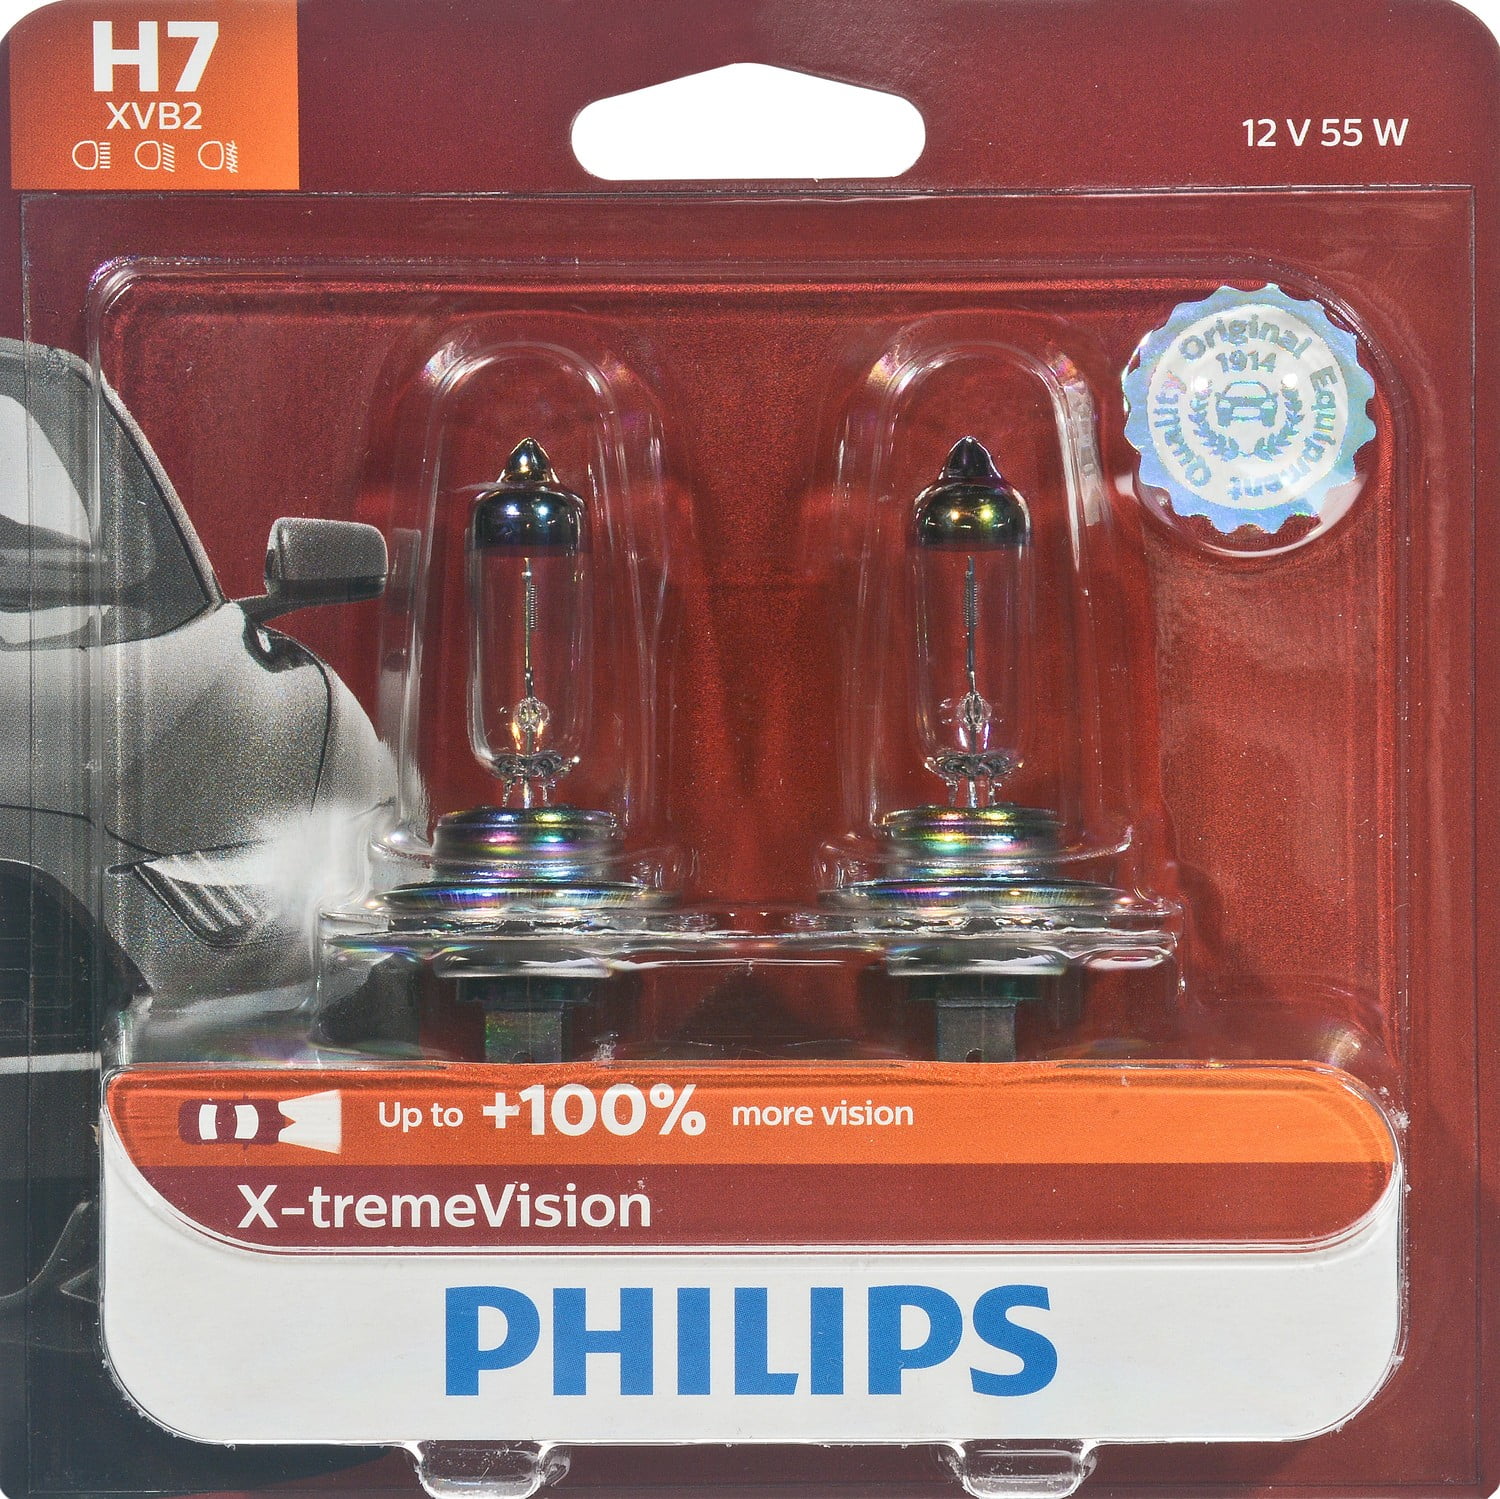 Lámpara H7 Philips X-tremeVision Moto +130 % 55W - 12972XV+BW